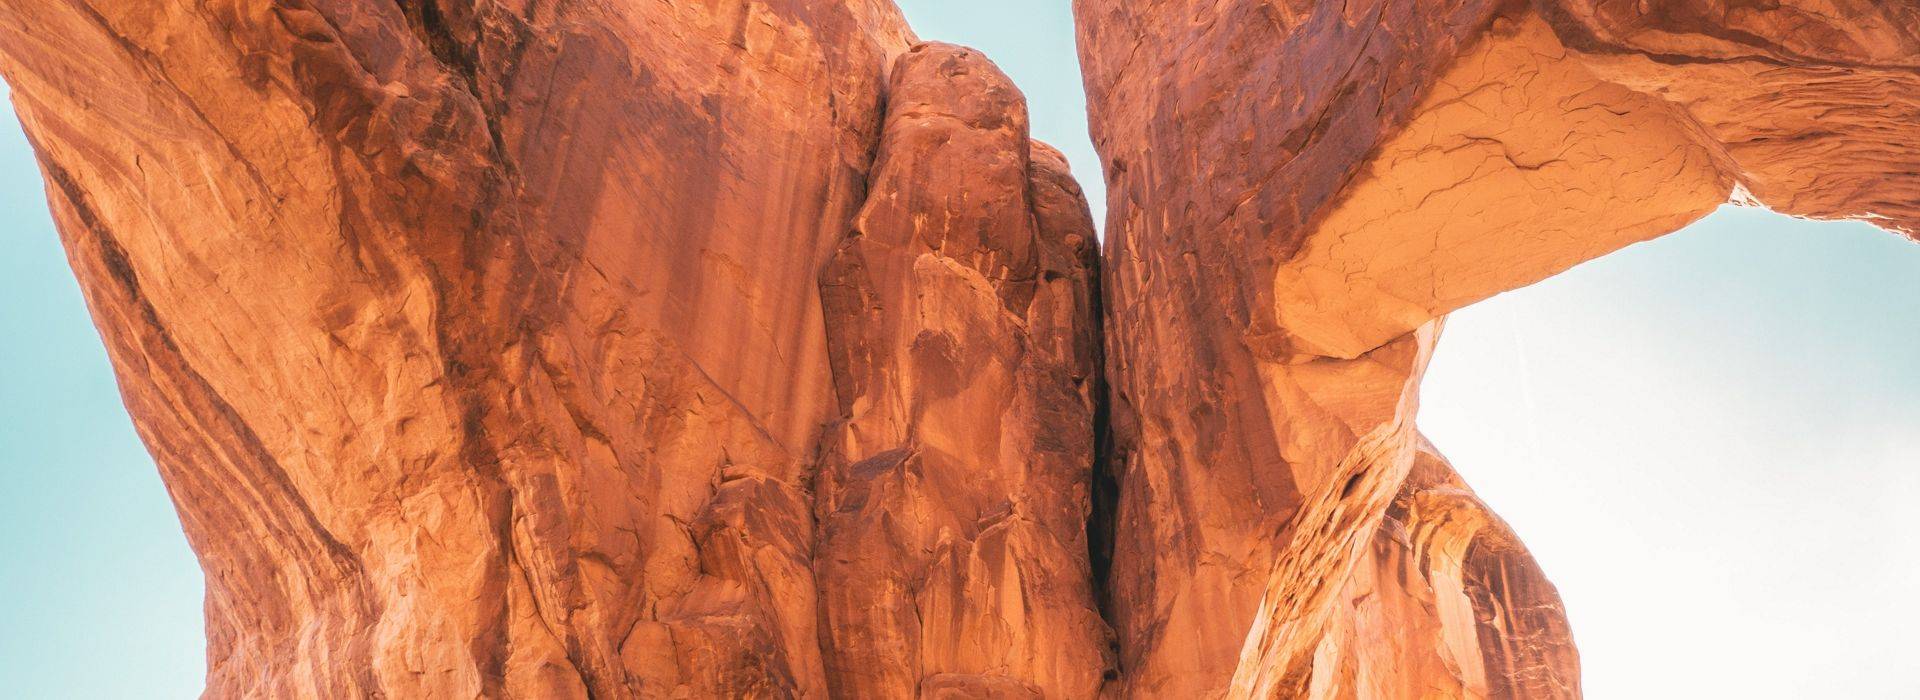 arches-national-park-moab-doran-erickson-unsplash.jpg